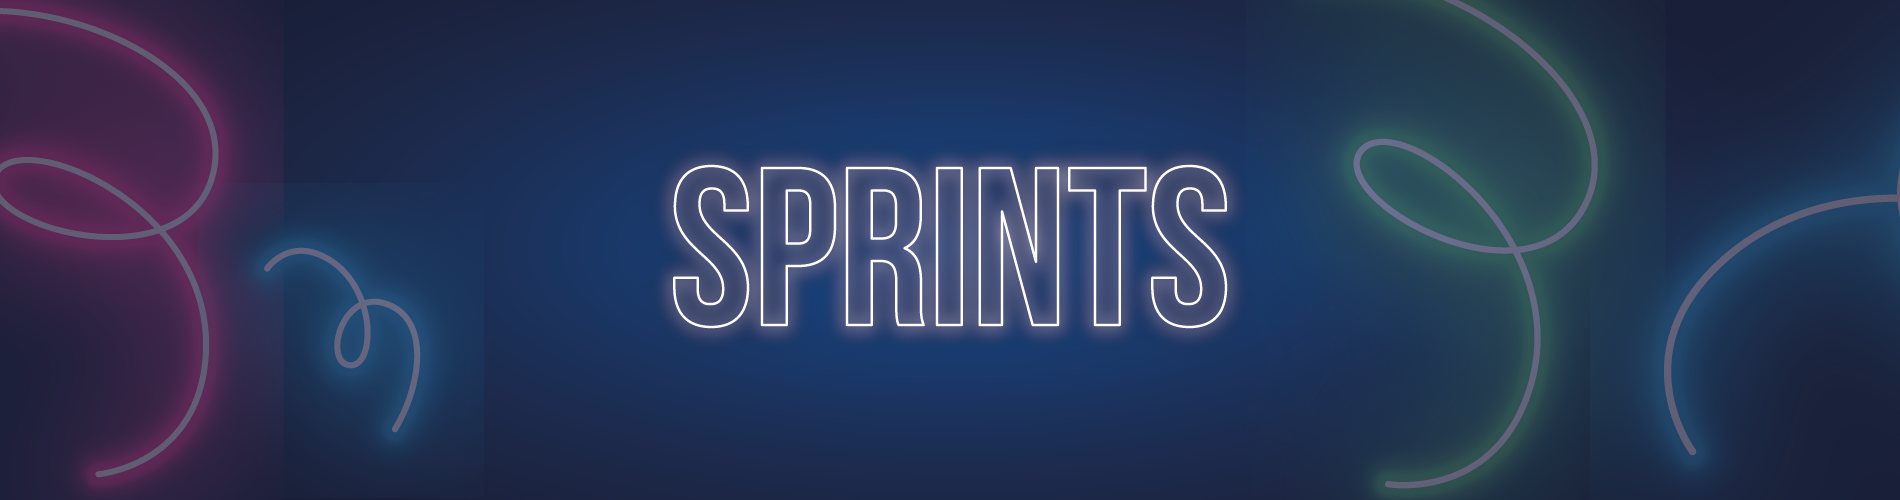 Sprints - web banner.png